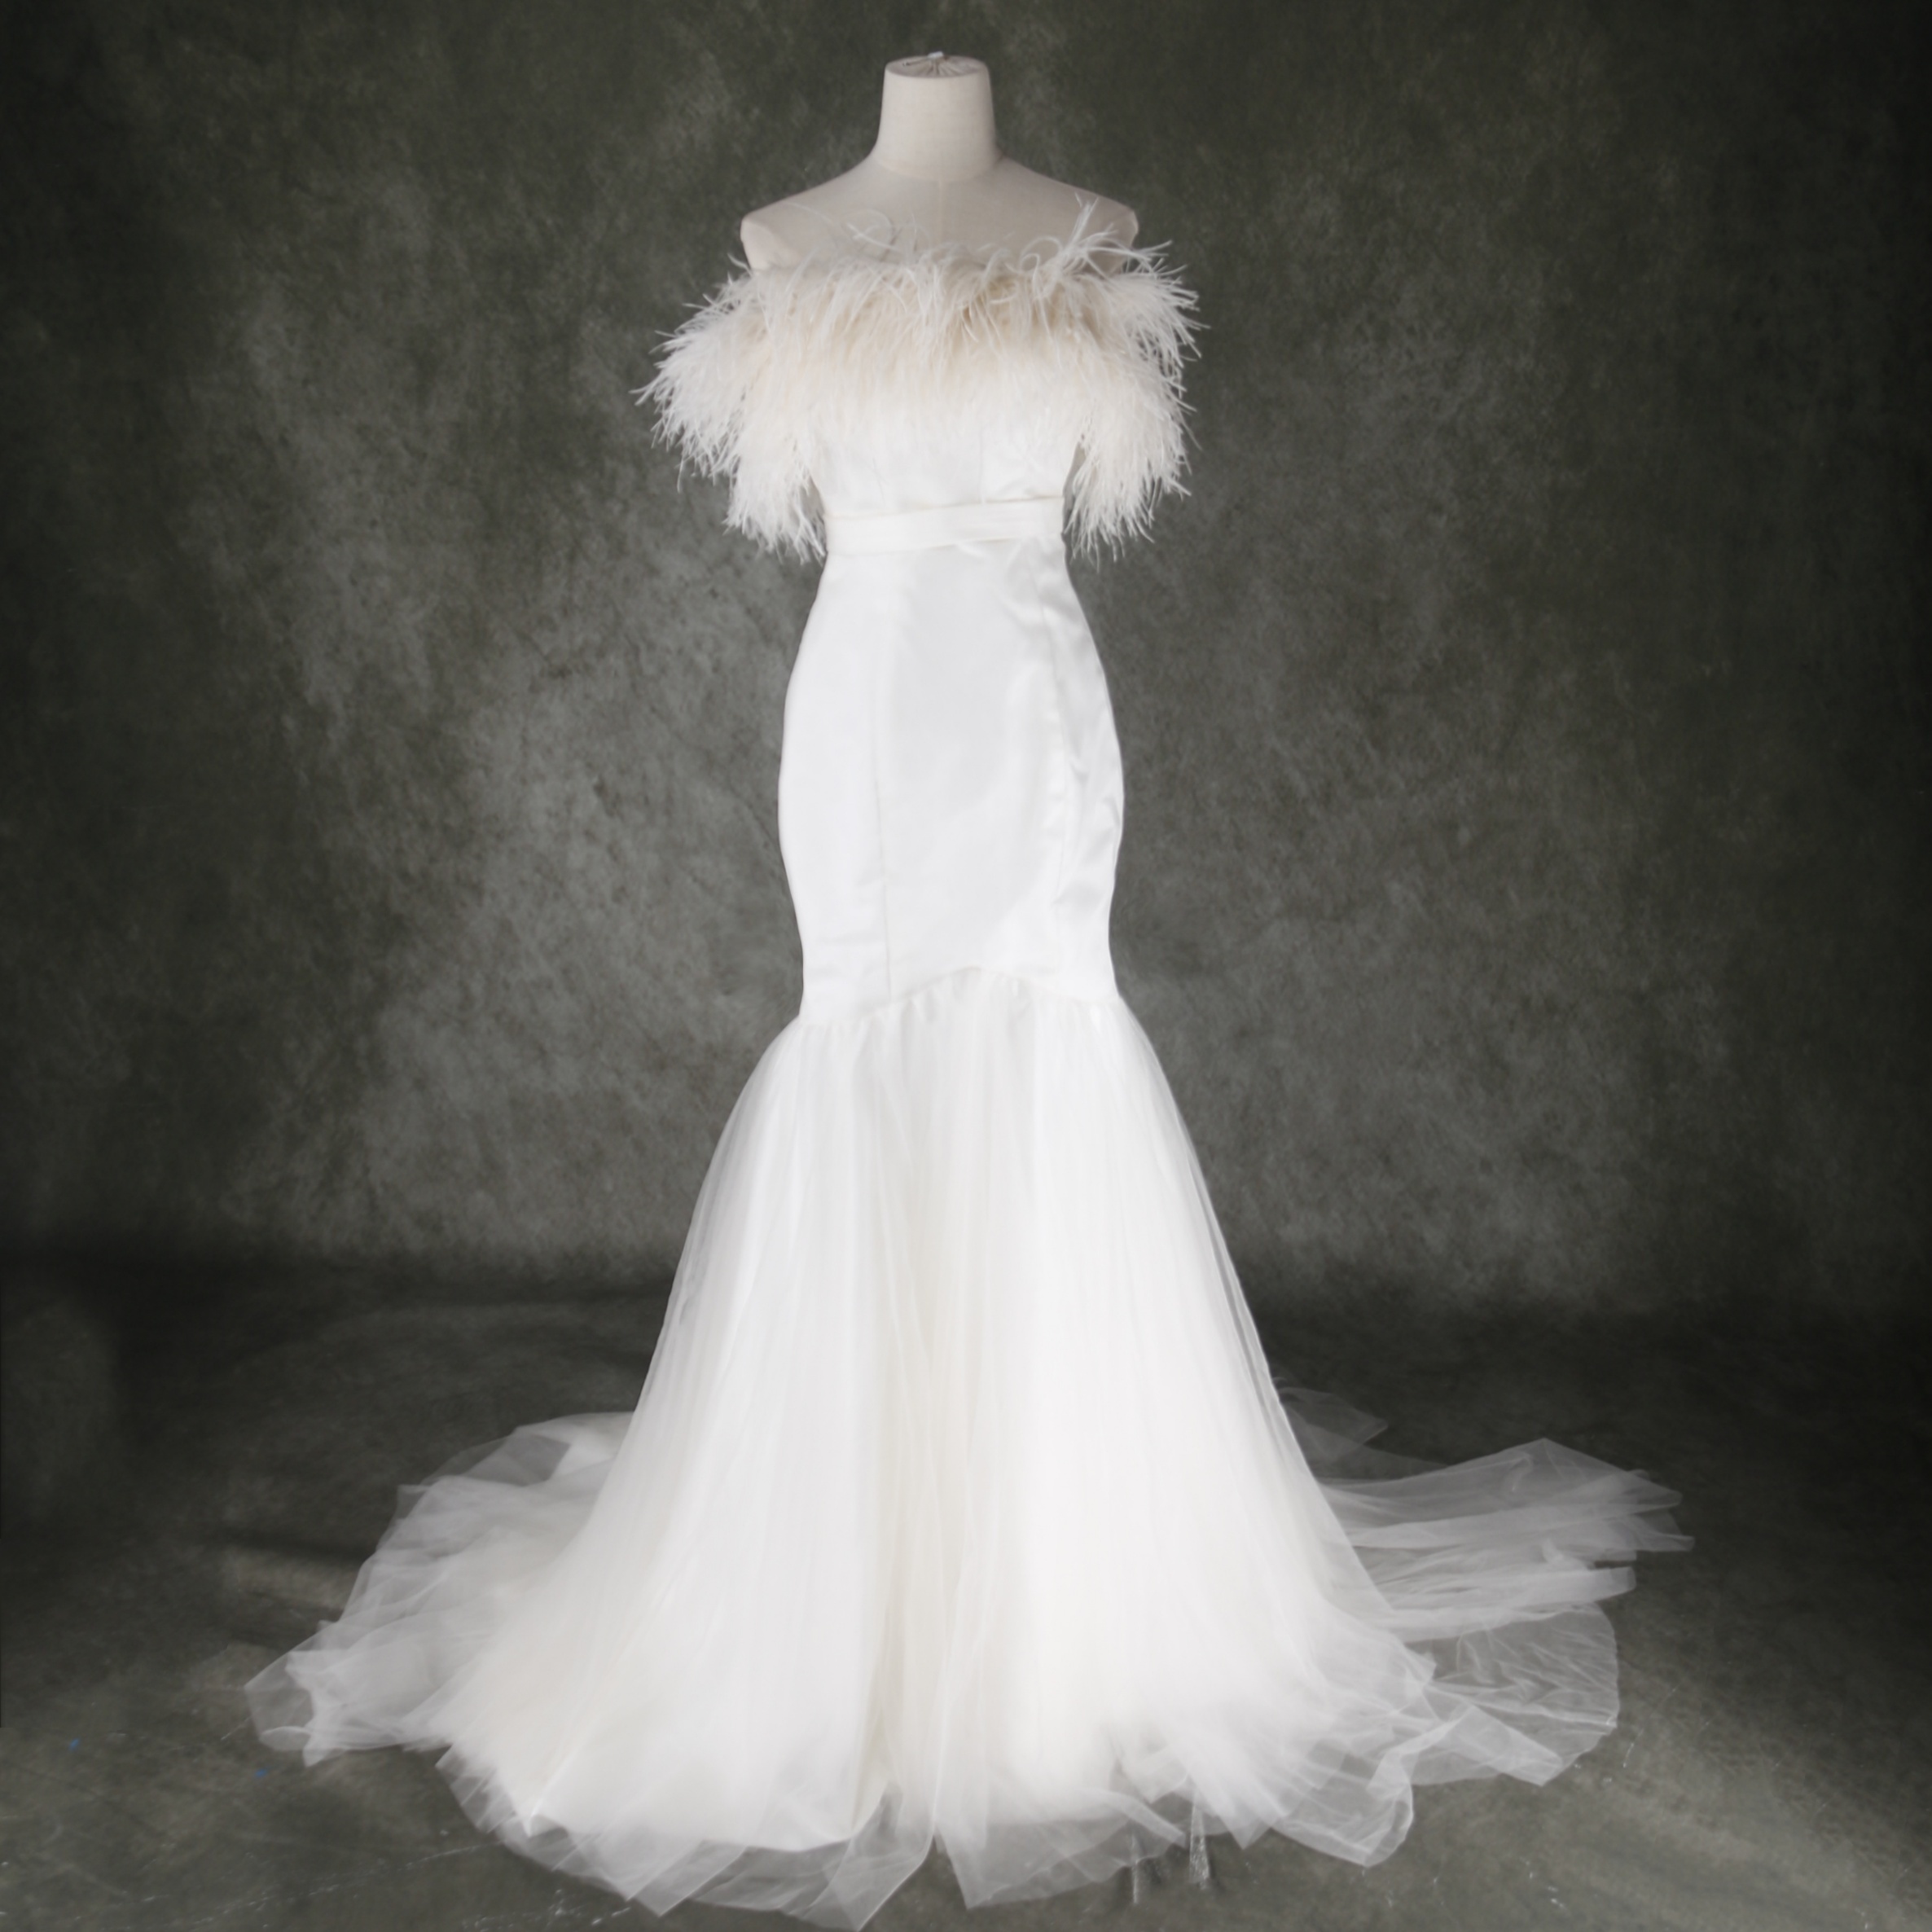 WEDDING DRESS – OqiOOipO dress